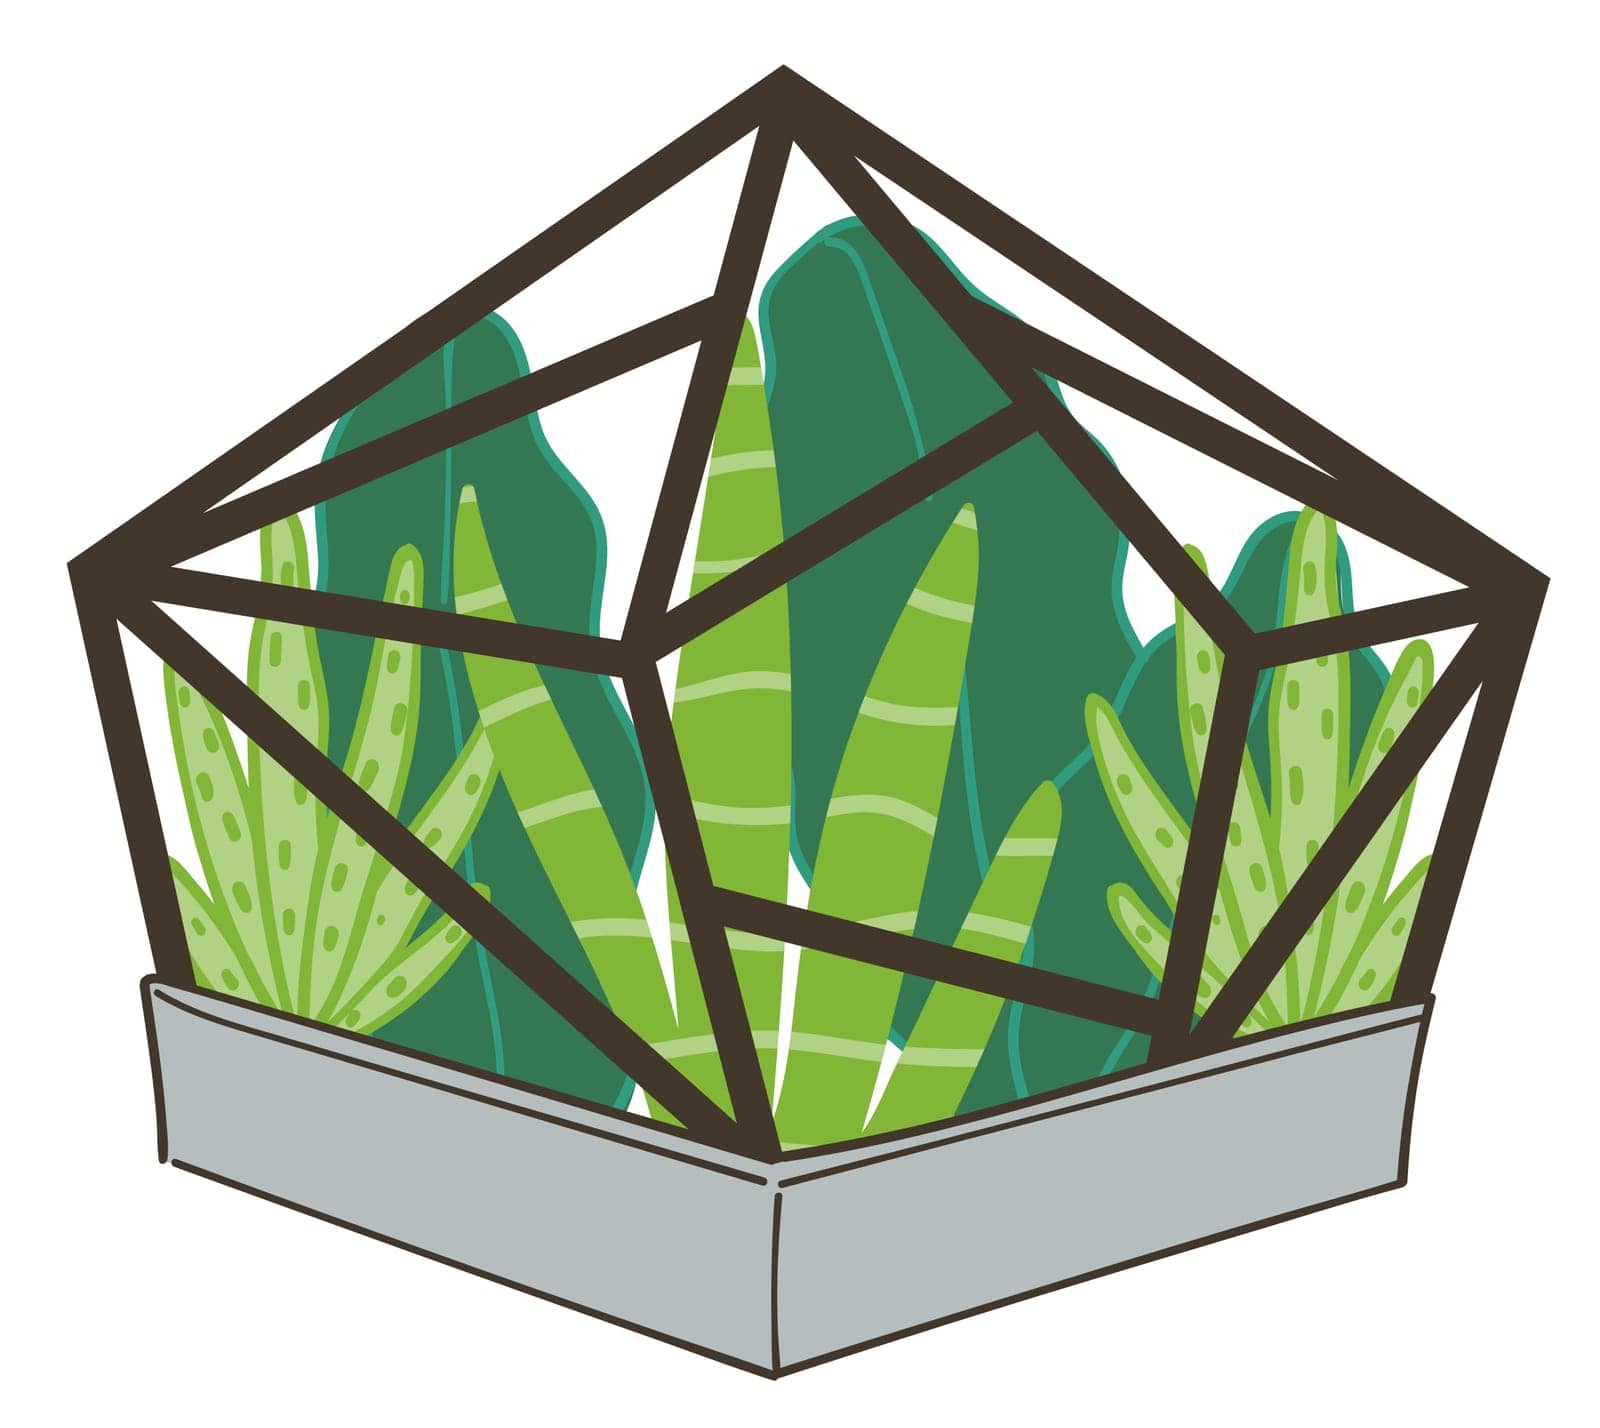 Succulents growing in glass terrarium ecosystem by Sonulkaster